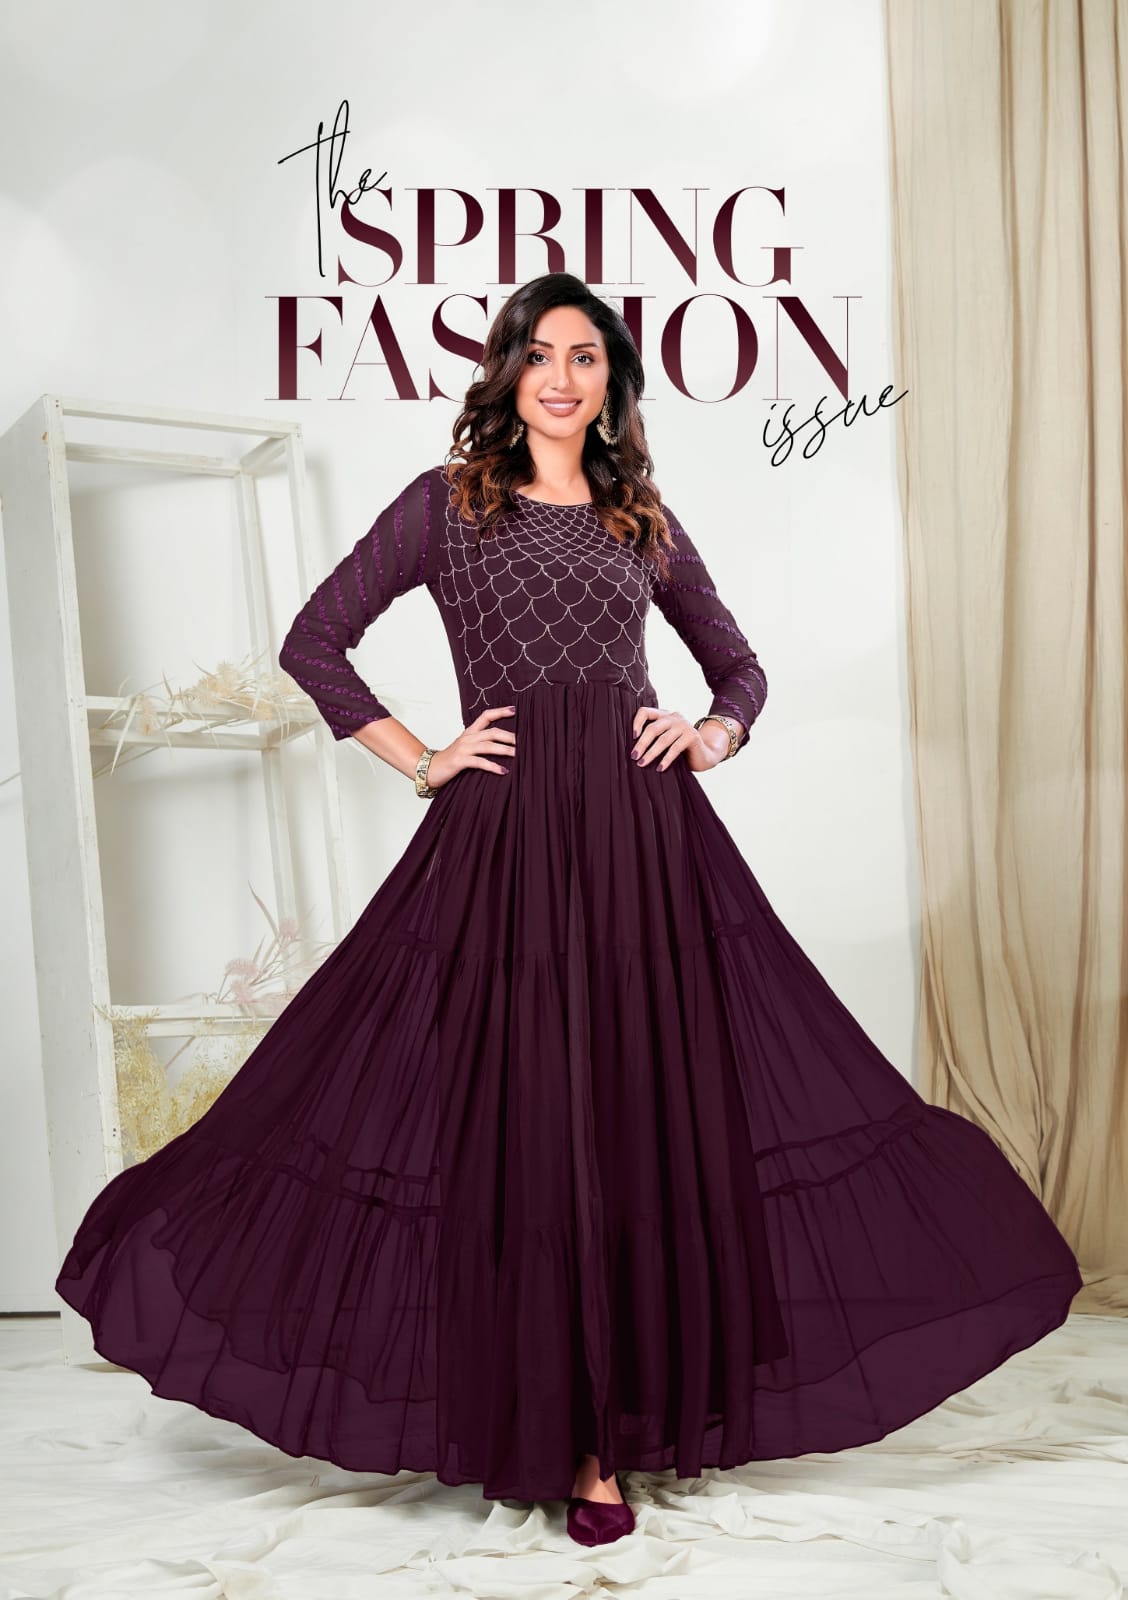 anju fabrics kit kat vol 2 viscose elegant stylish look indo western catalog